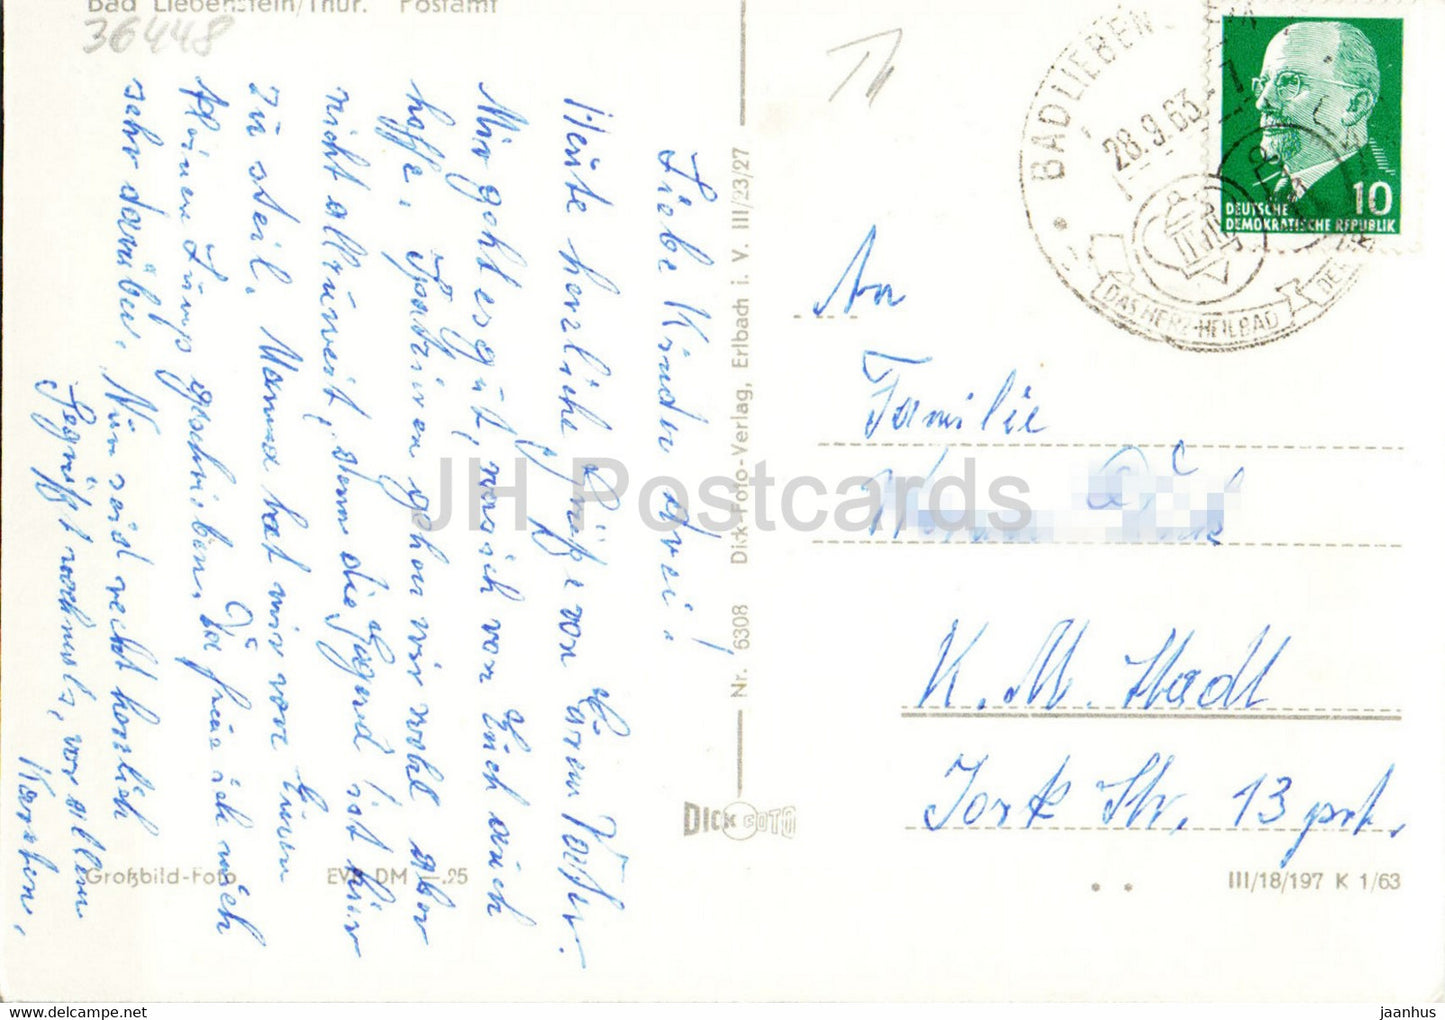 Bad Liebenstein - Postamt - bureau de poste - voiture - carte postale ancienne - 1963 - Allemagne DDR - utilisé